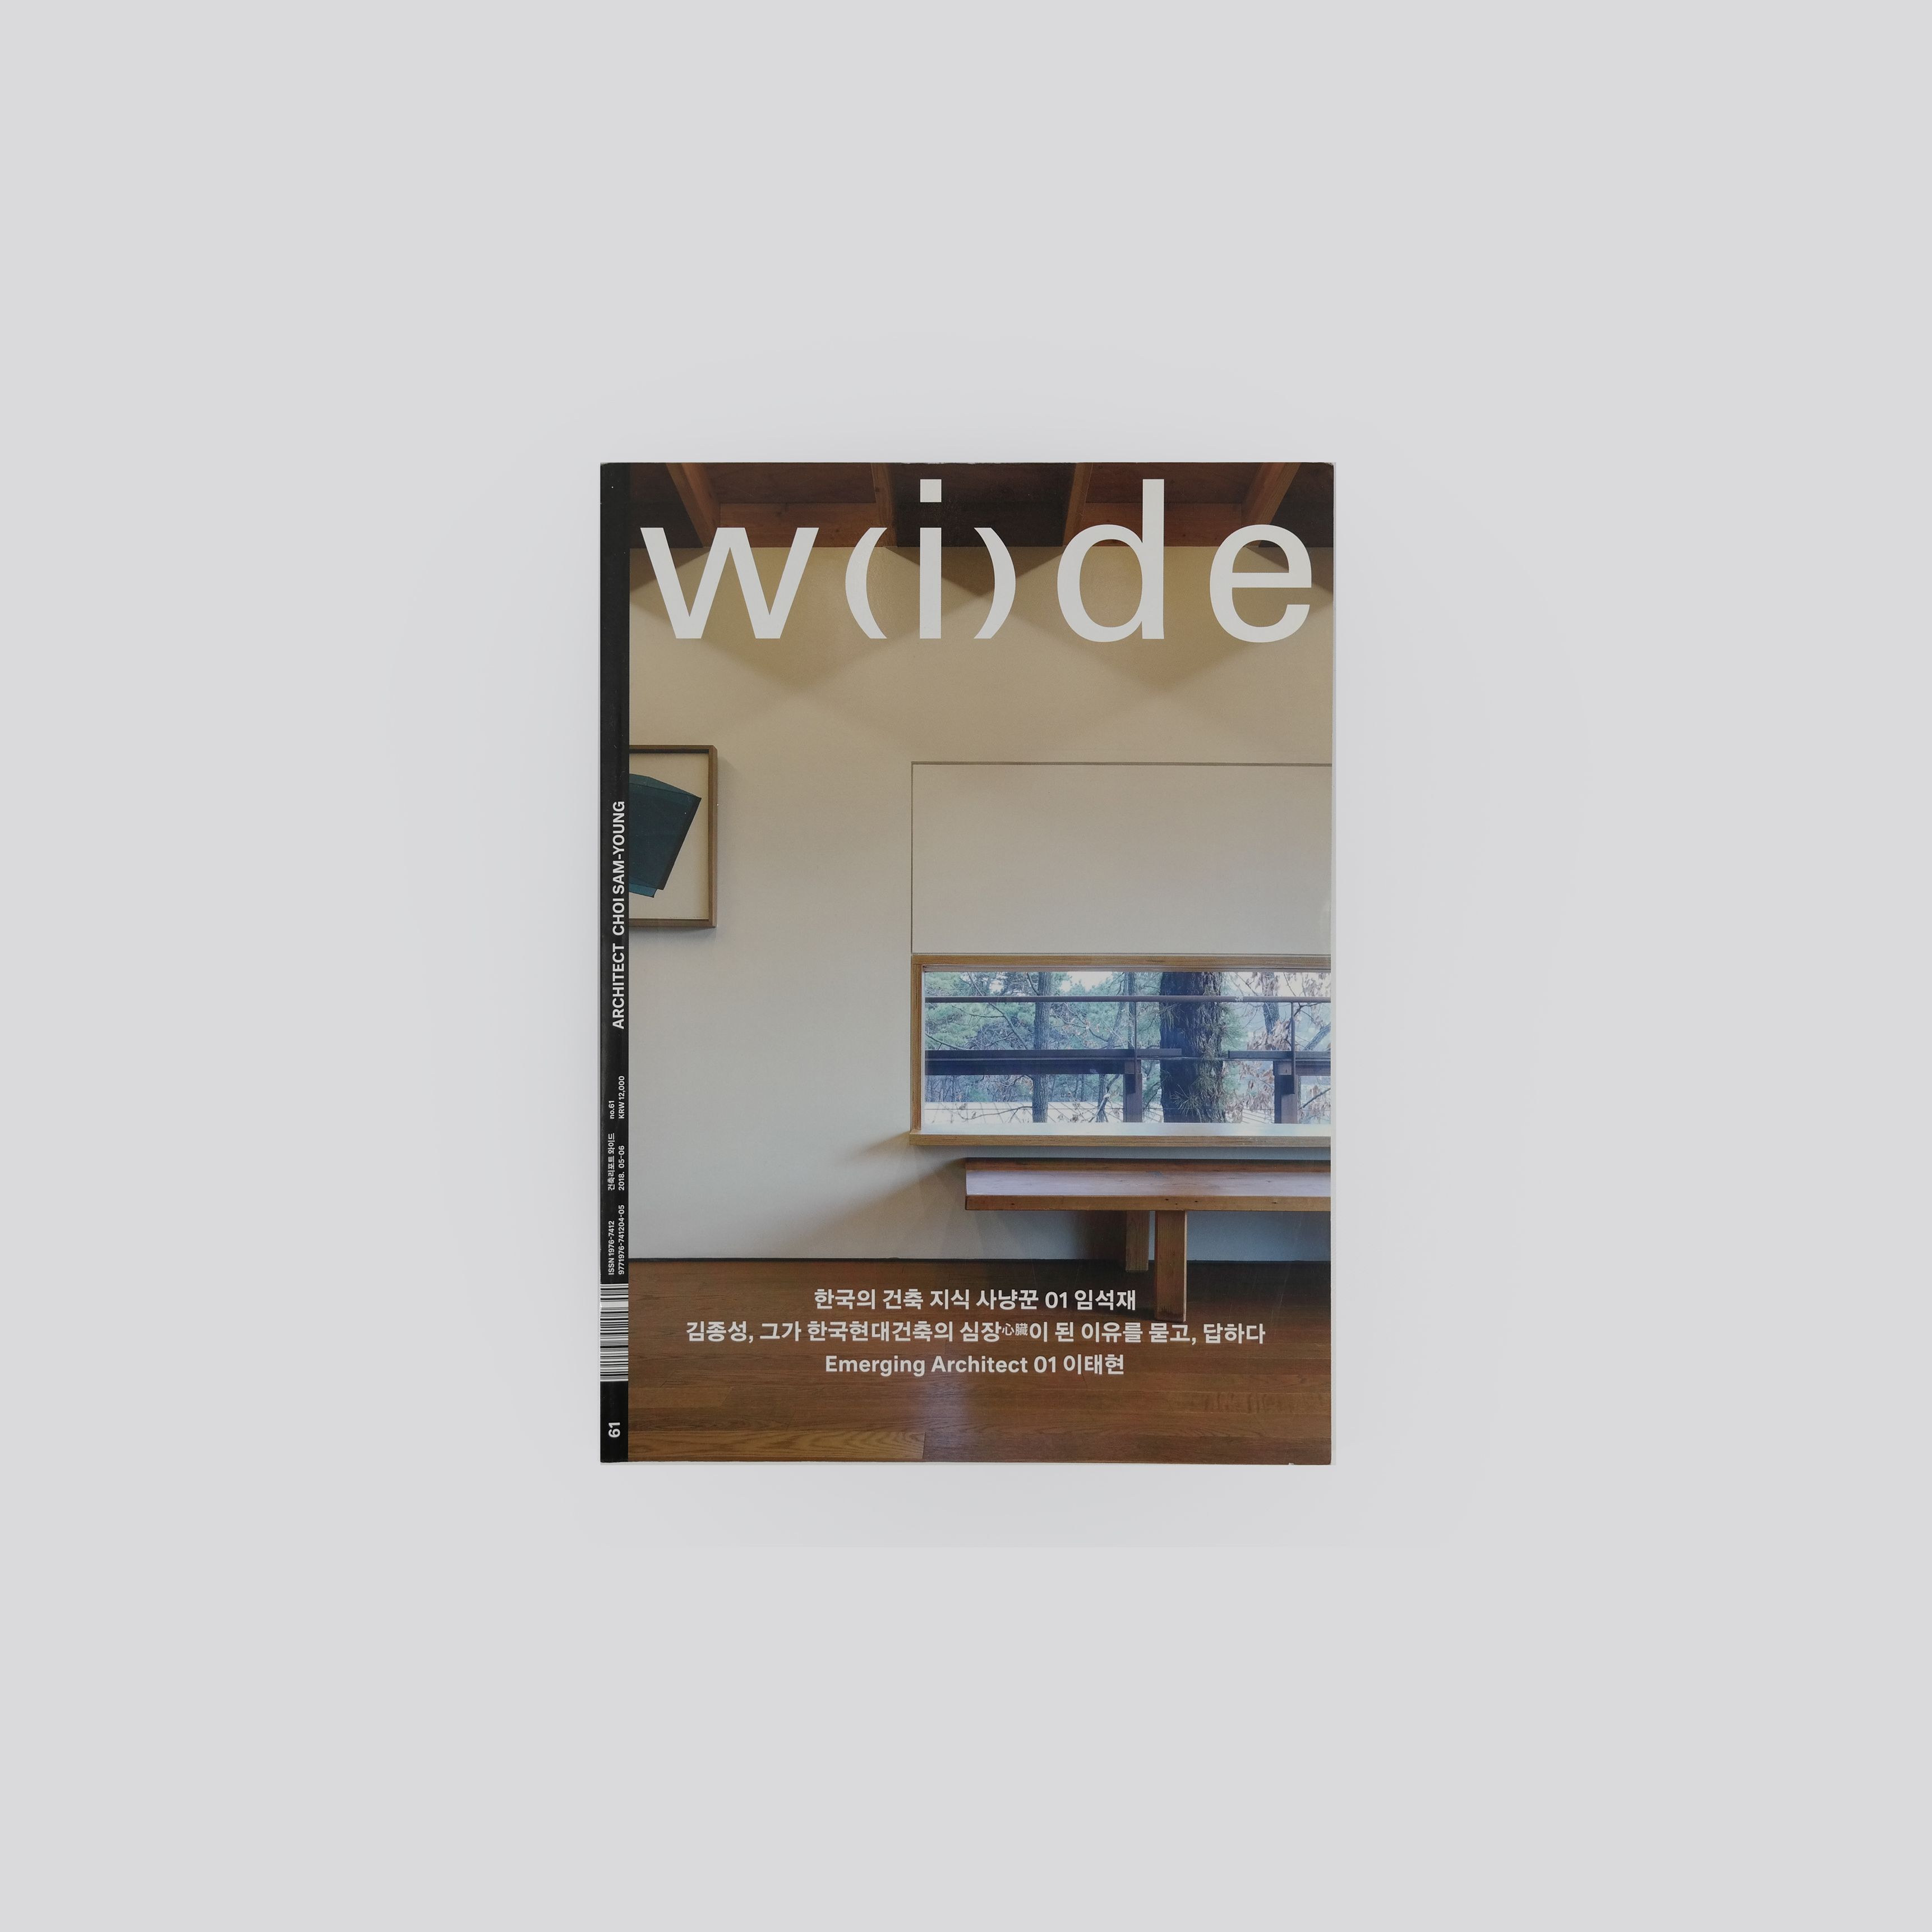 WIDE 건축리포트 와이드, No. 61